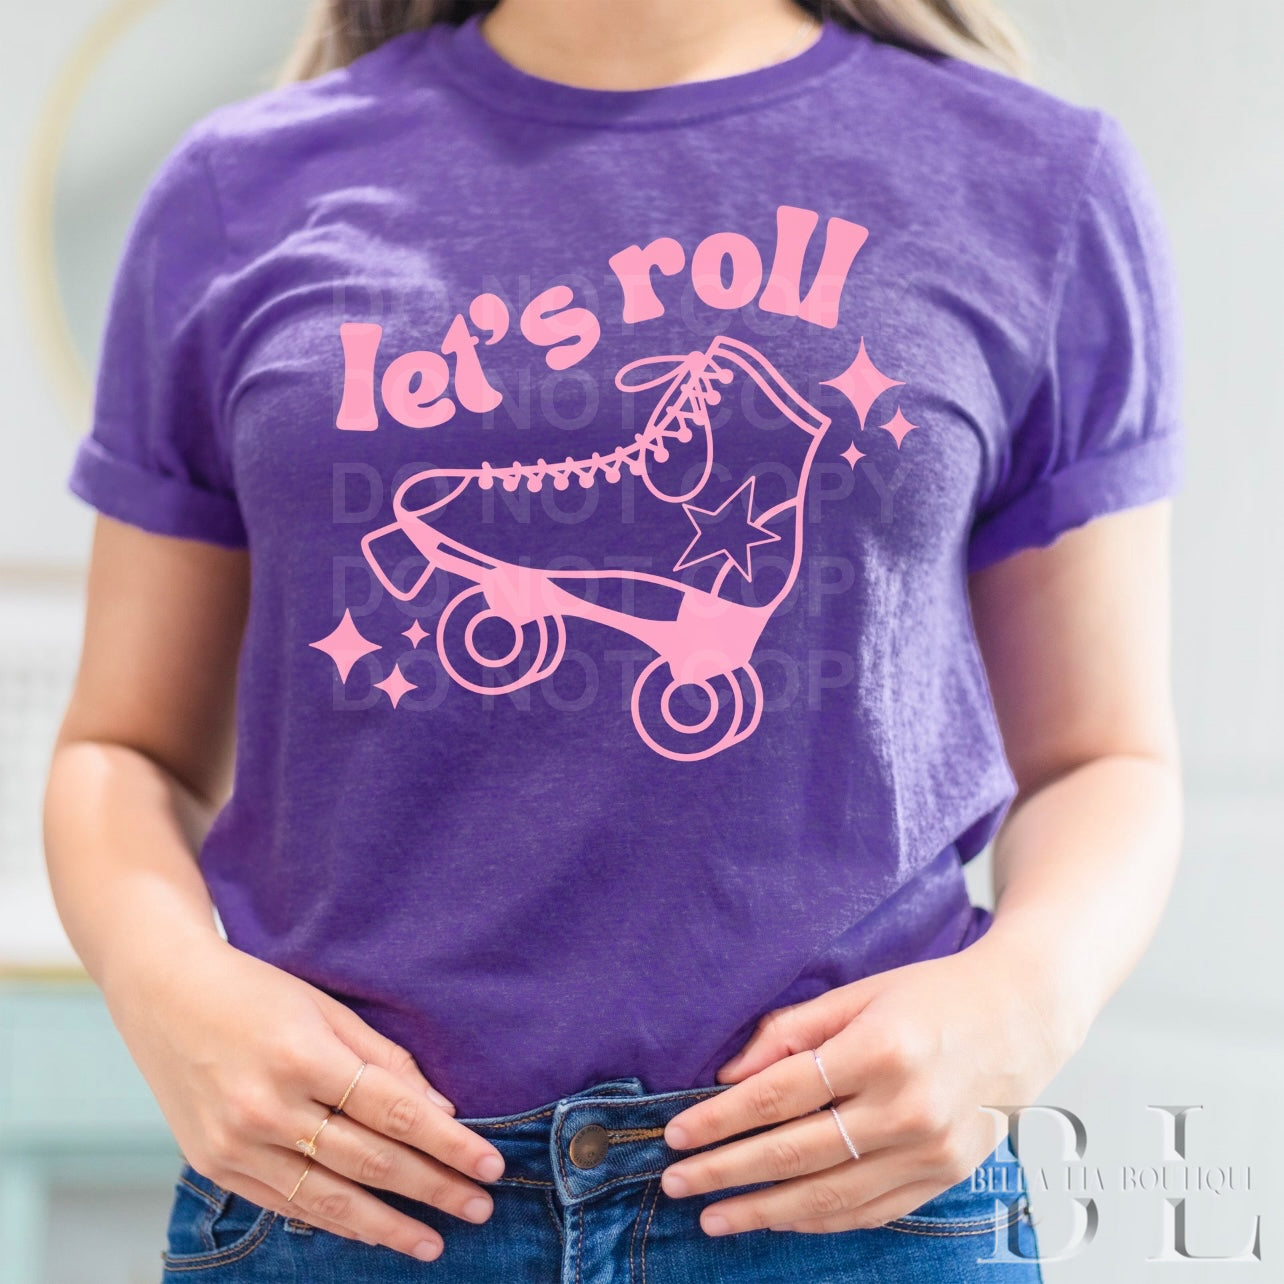 Let's Roll Graphic Tee or Sweatshirt - Bella Lia Boutique